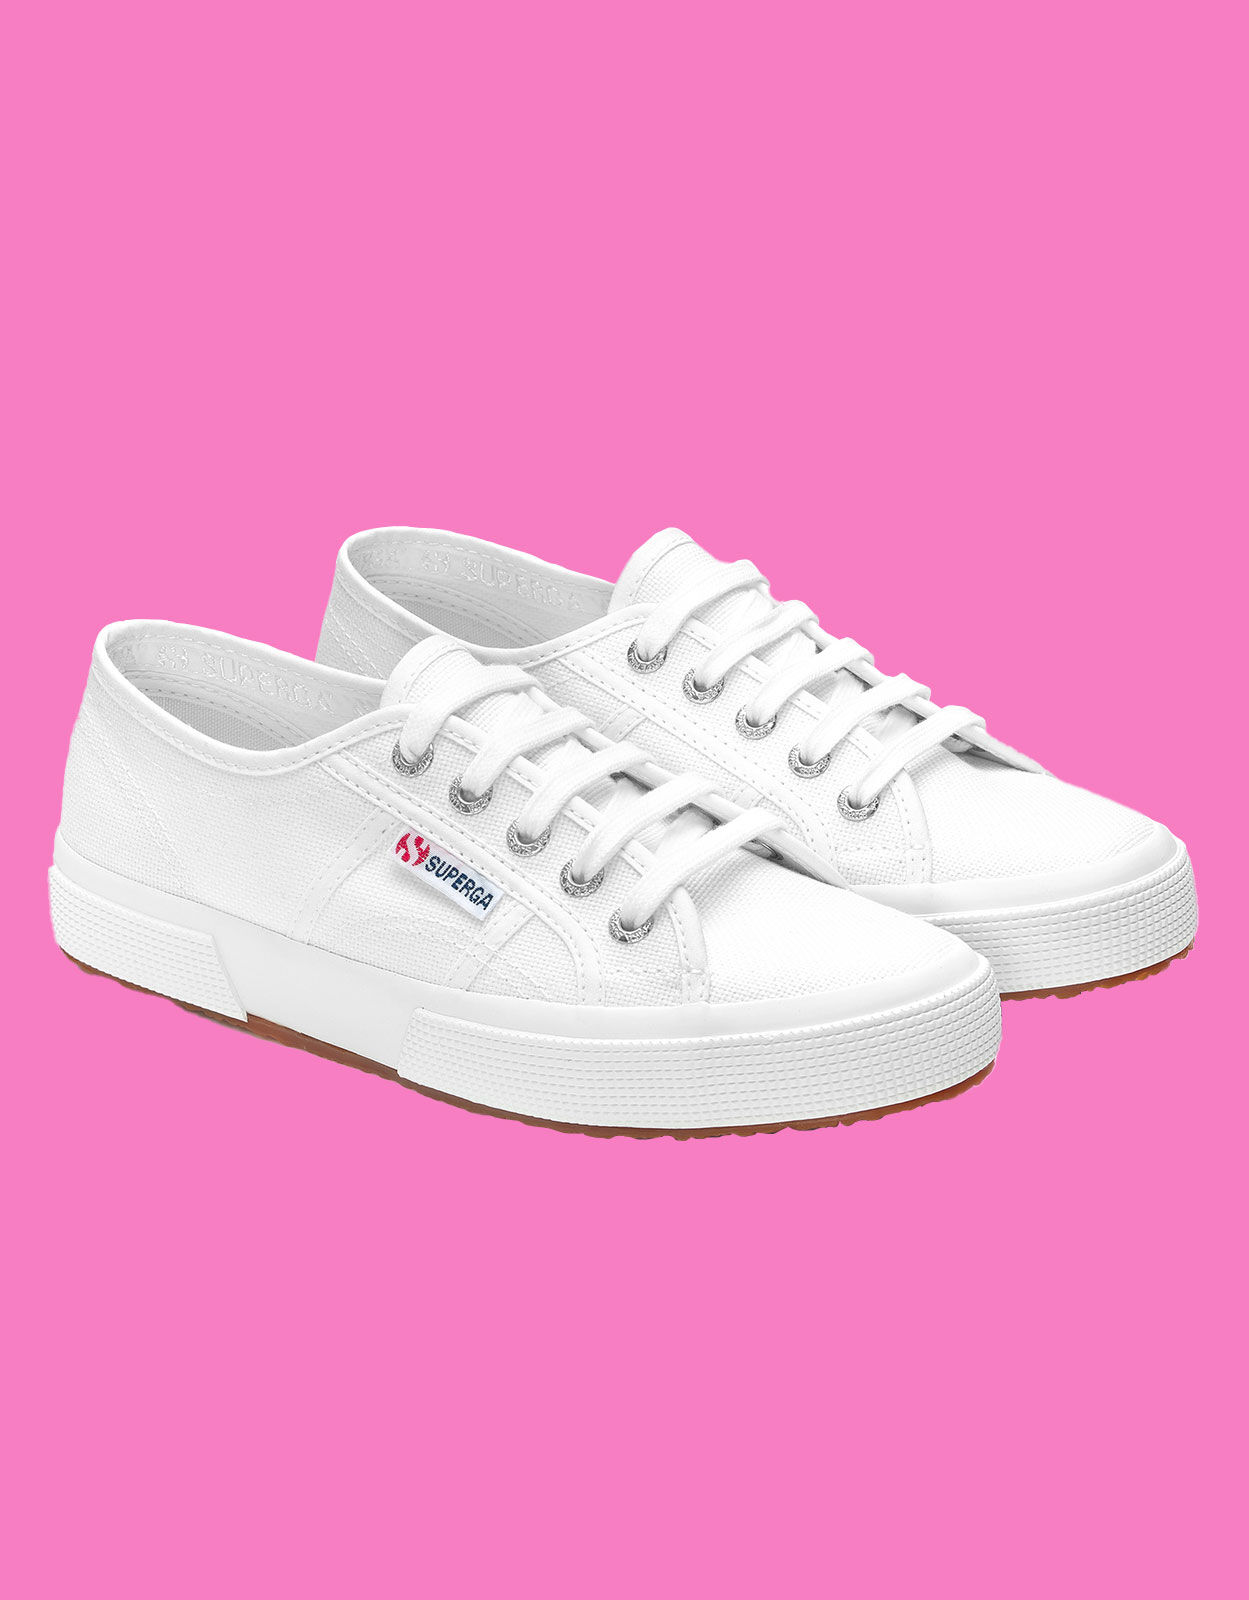 Superga Women's 2740 Platform Slip-On Sneakers, White, 2.5 UK:  Amazon.co.uk: Fashion